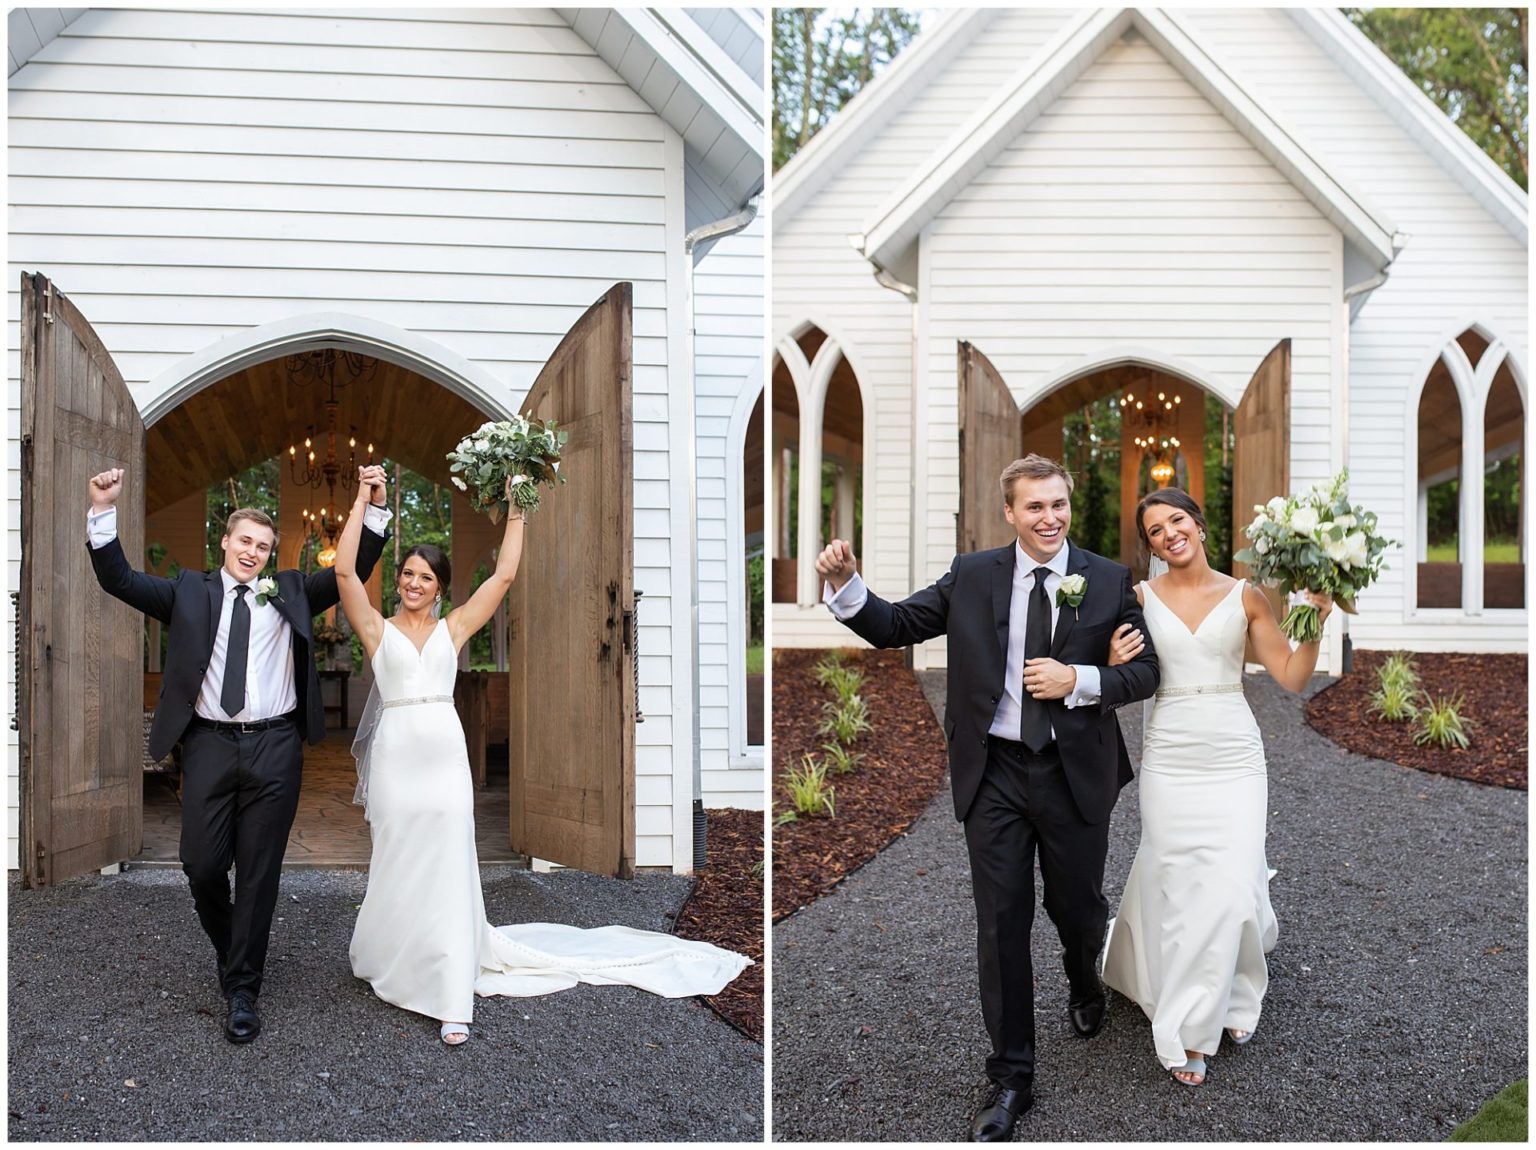 Melanie-Grady-Photography-Chapel-in-the-woods-firefly-lane-wedding-55